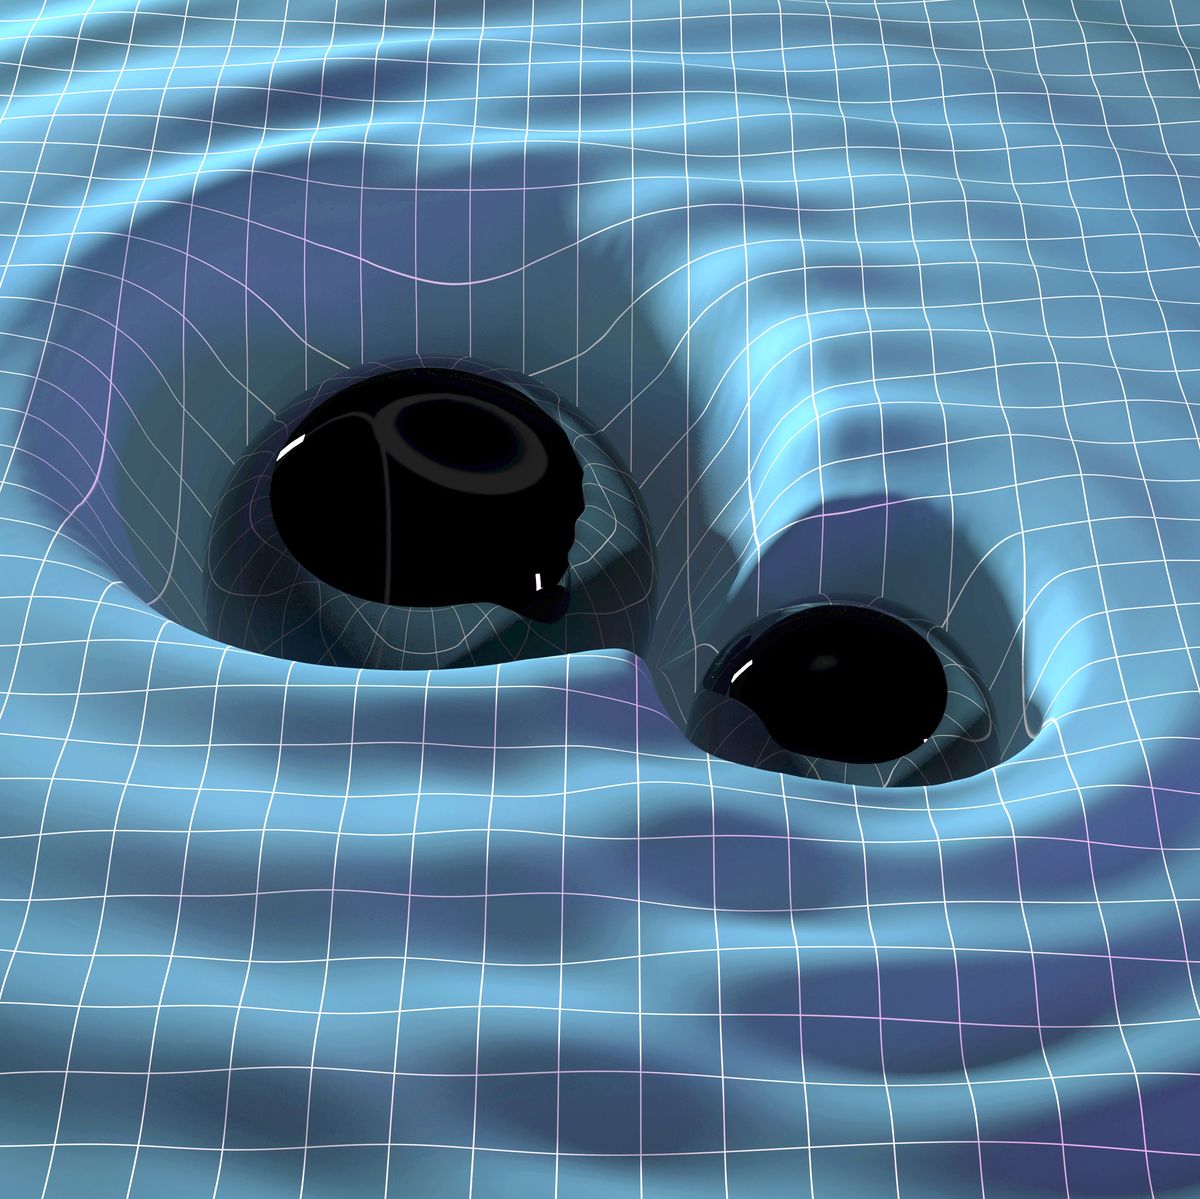 Ripple Effect: Gravitational Waves Begin to Reveal a Hidden